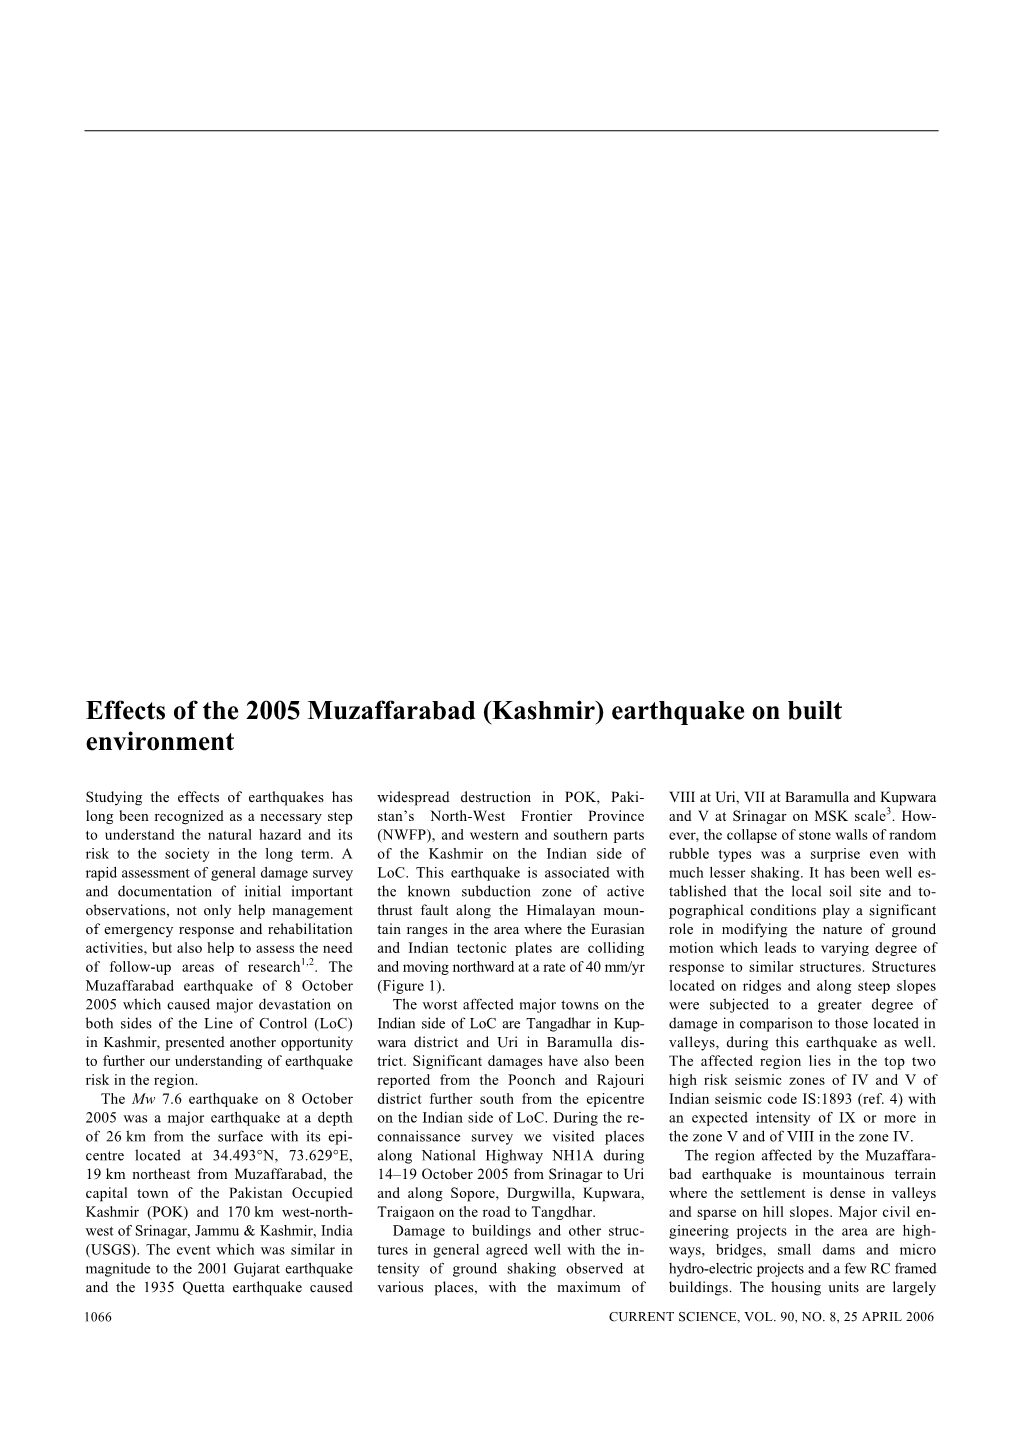 Effects of the 2005 Muzaffarabad (Kashmir) Earthquake on Built Environment